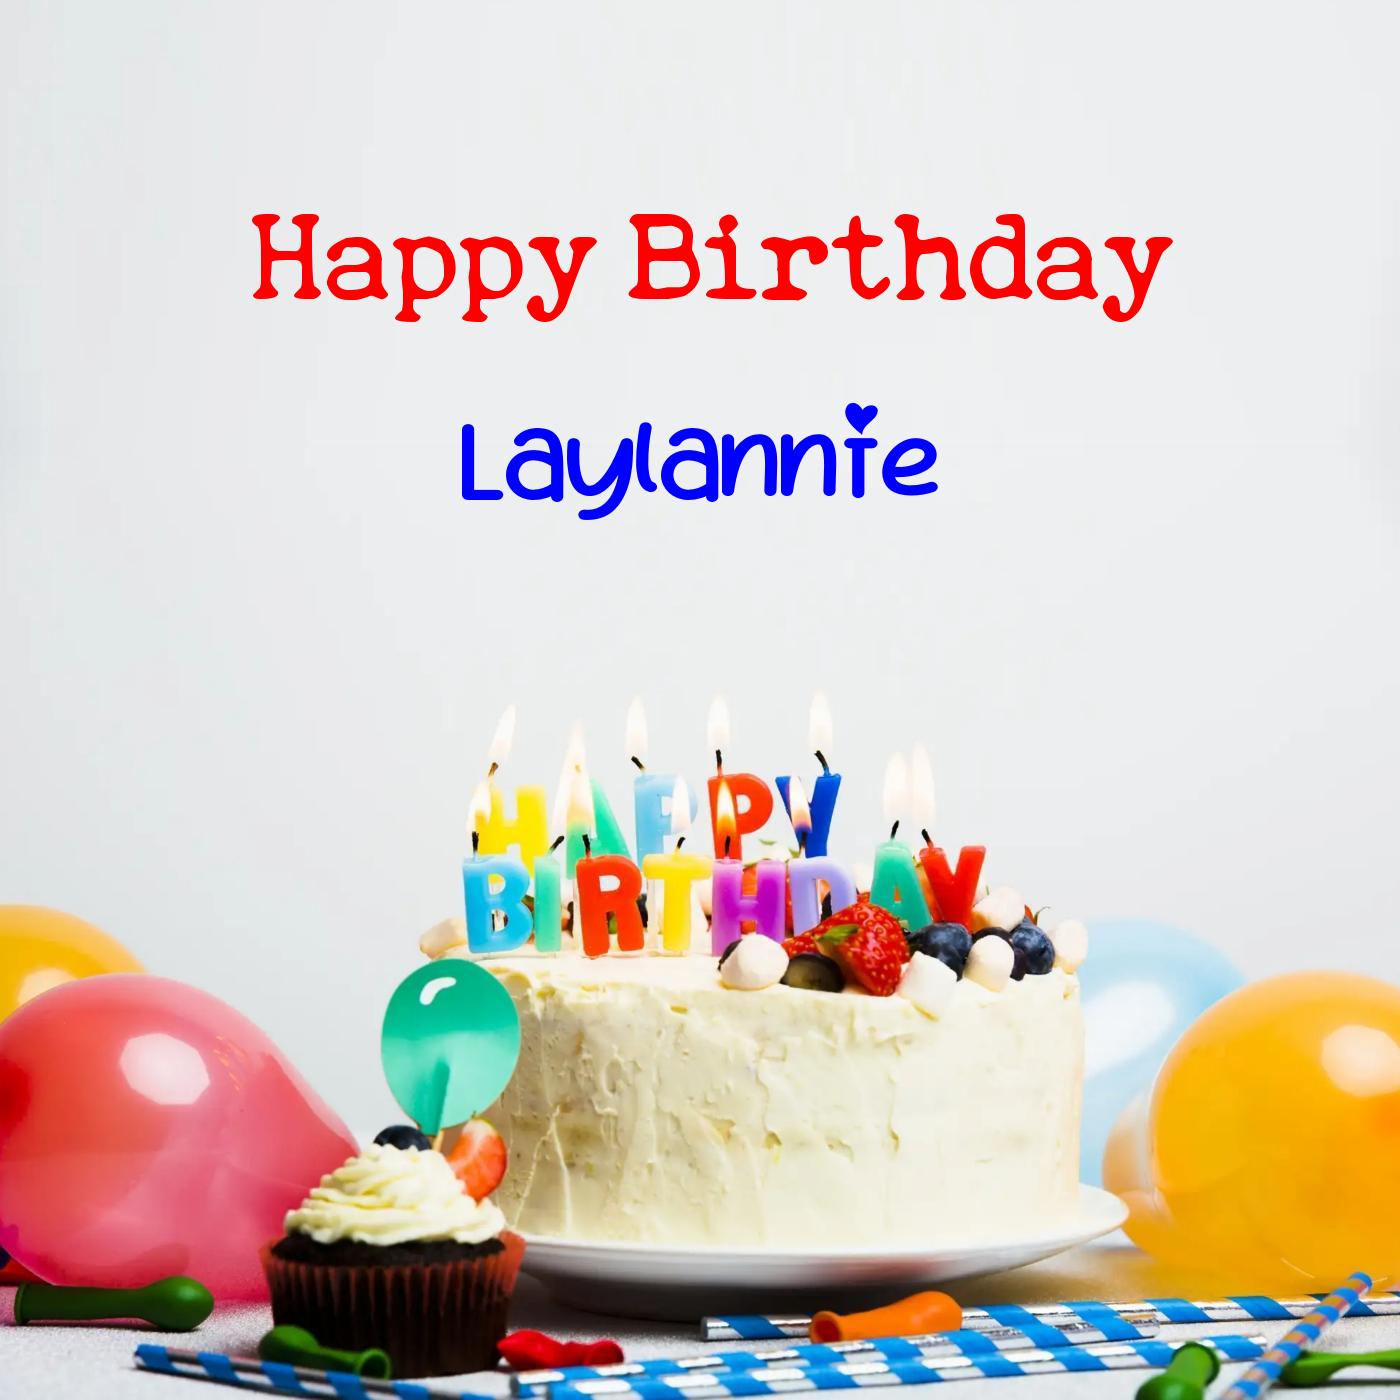 Happy Birthday Laylannie Cake Balloons Card